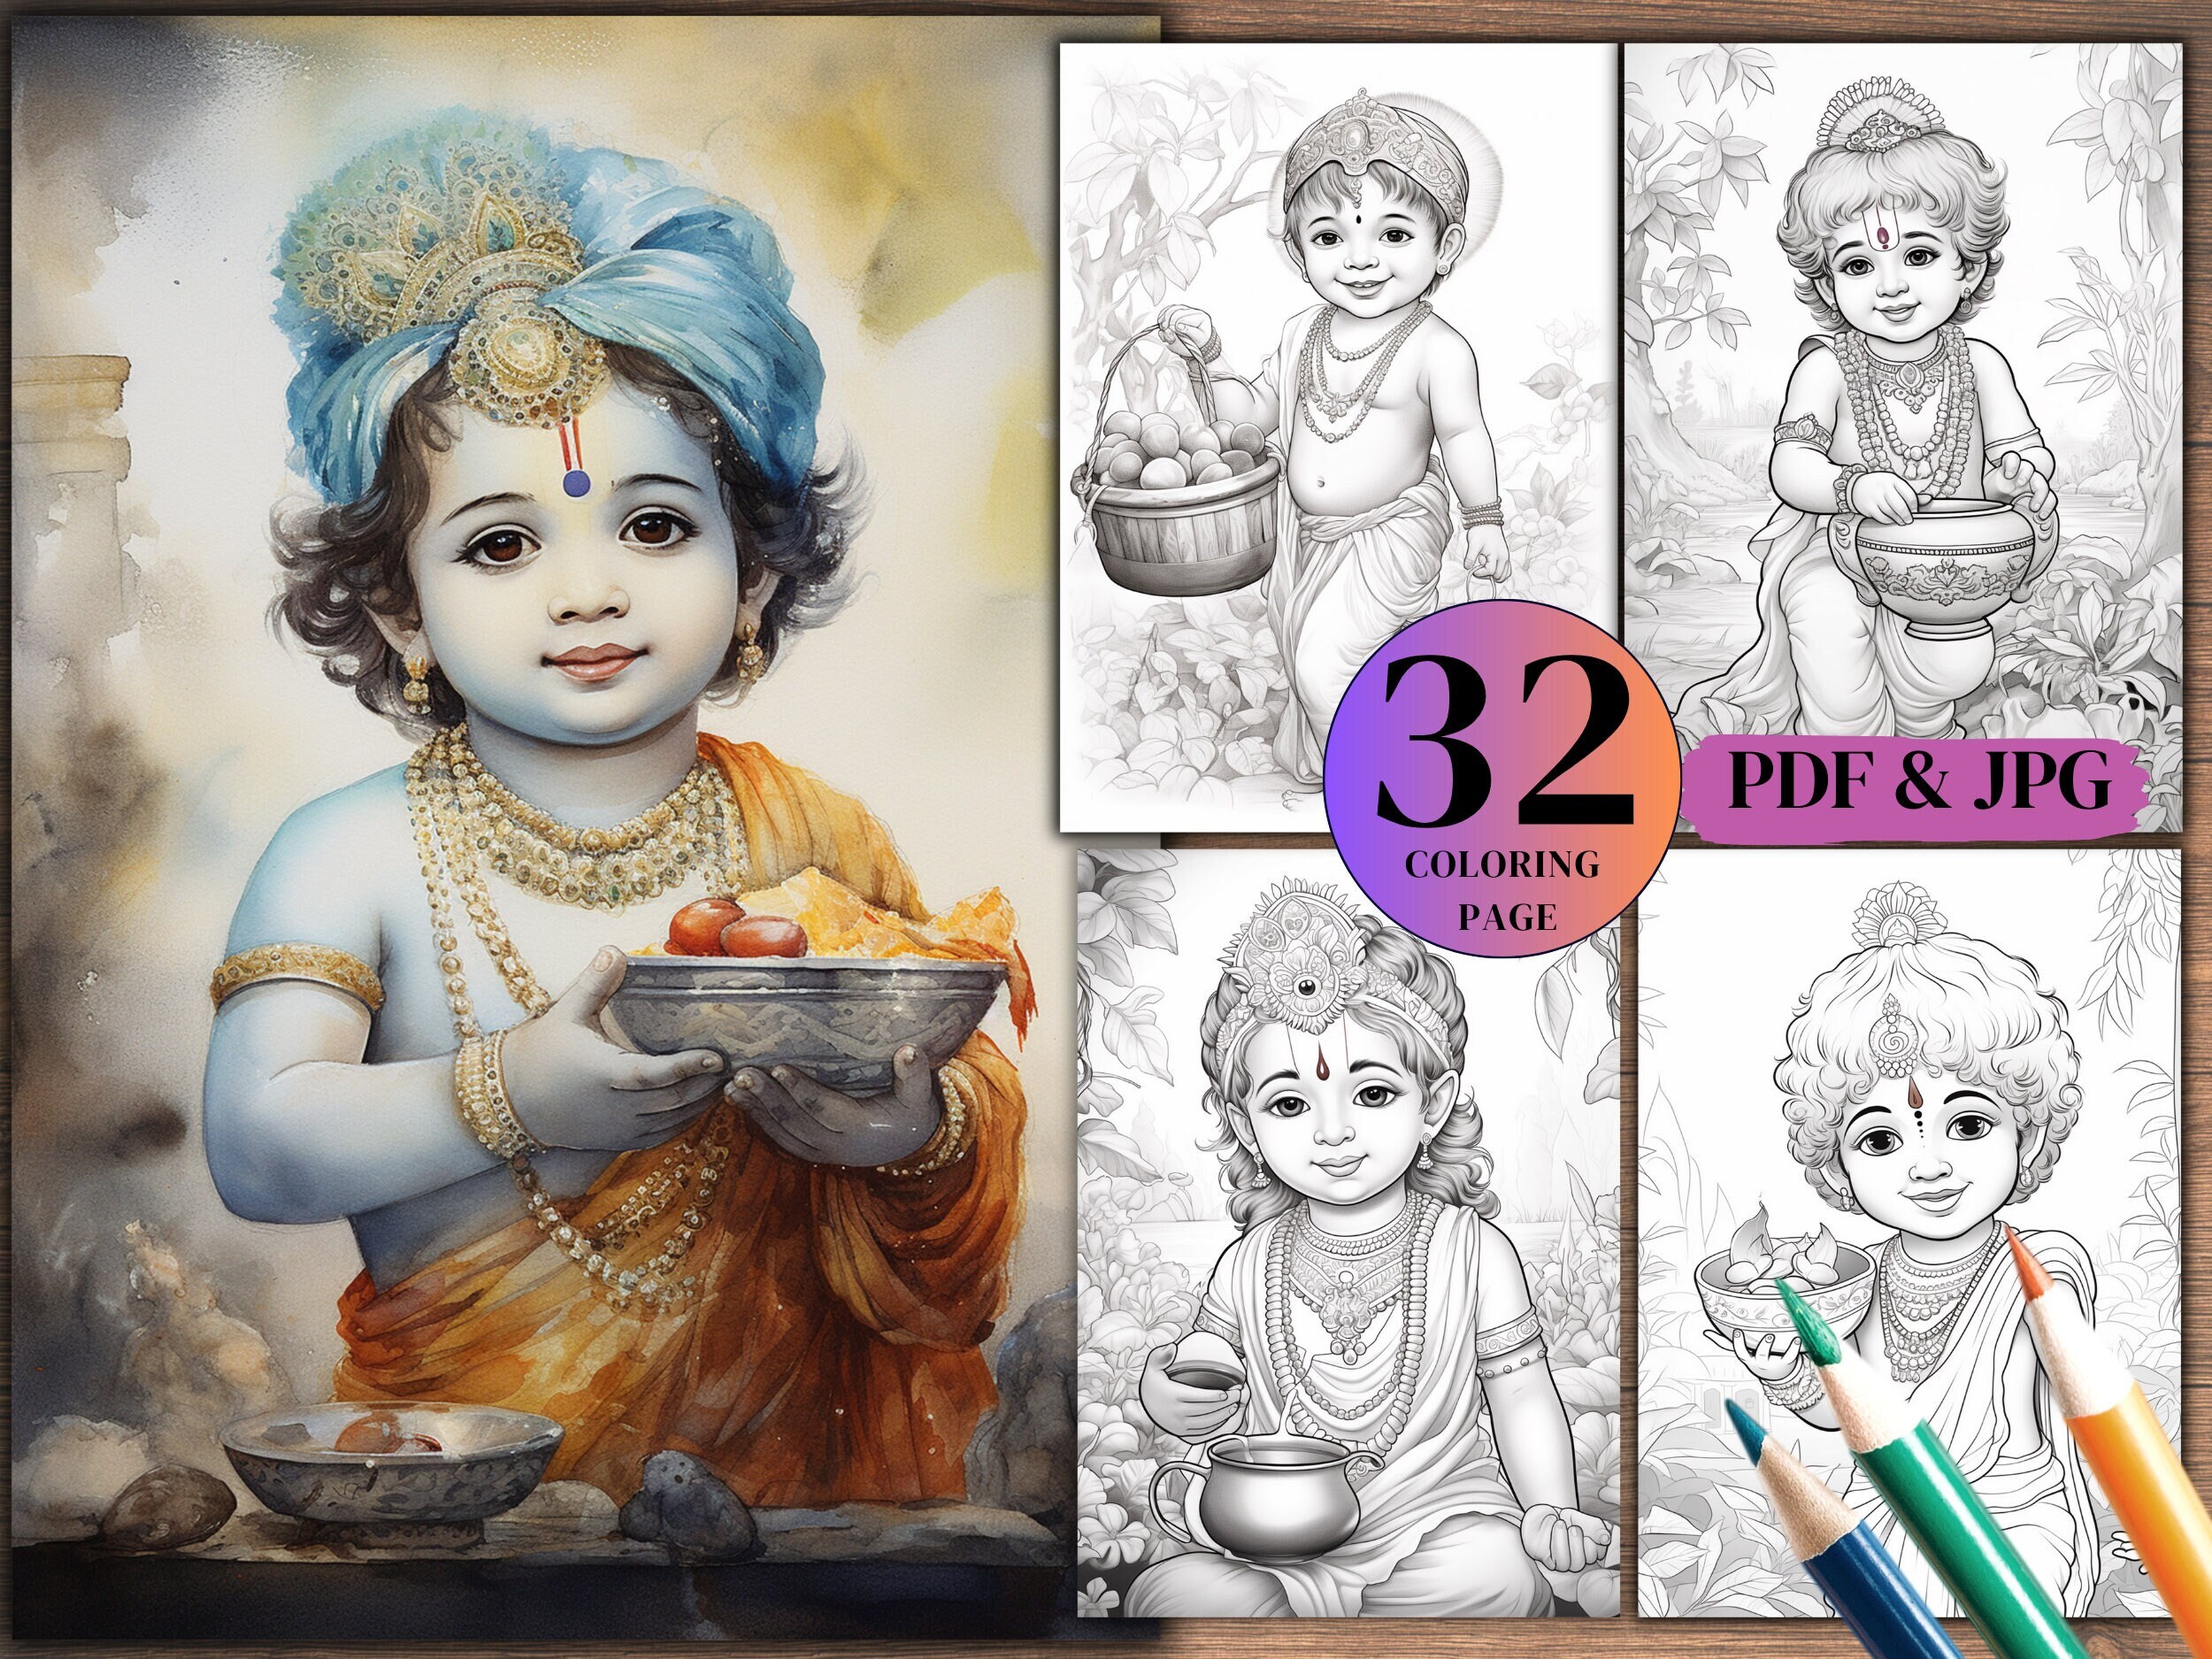 Baby krishna hands coloring page hanuman printable krishna lord hanuman goddess durga grayscale coloring pages pdf jpge files